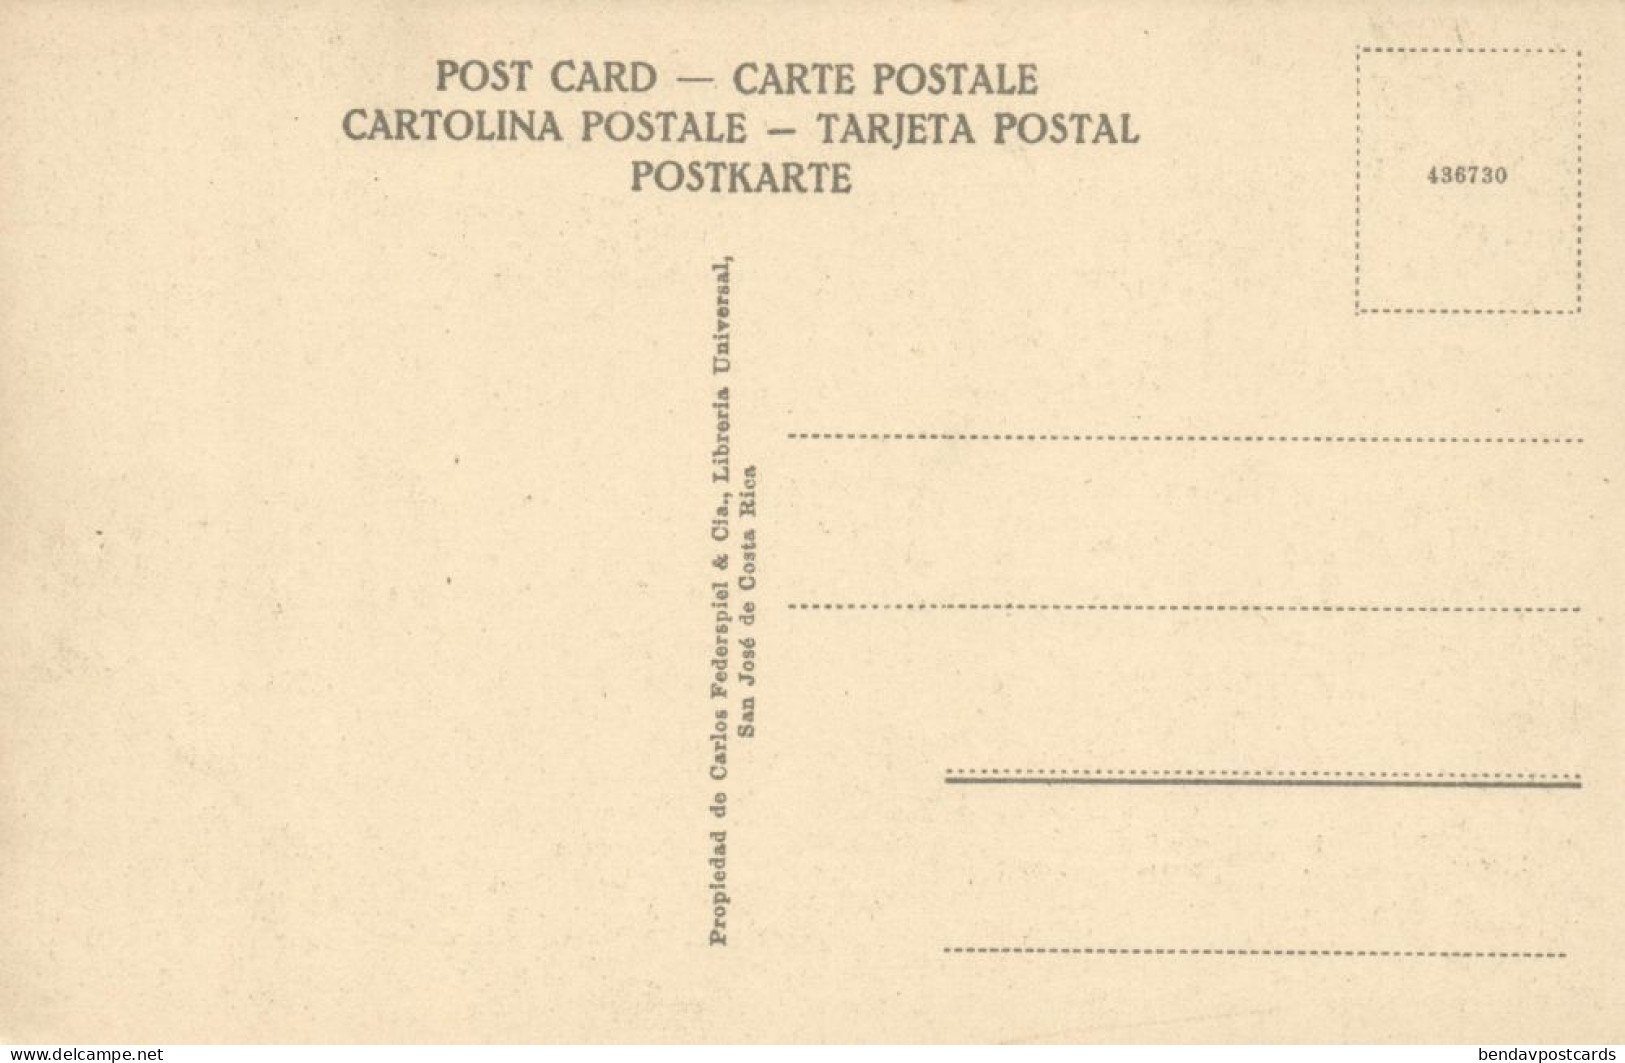 Costa Rica, C.A., SAN JOSÉ, Atlantic Railway Station, Cars (1920s) Postcard - Costa Rica